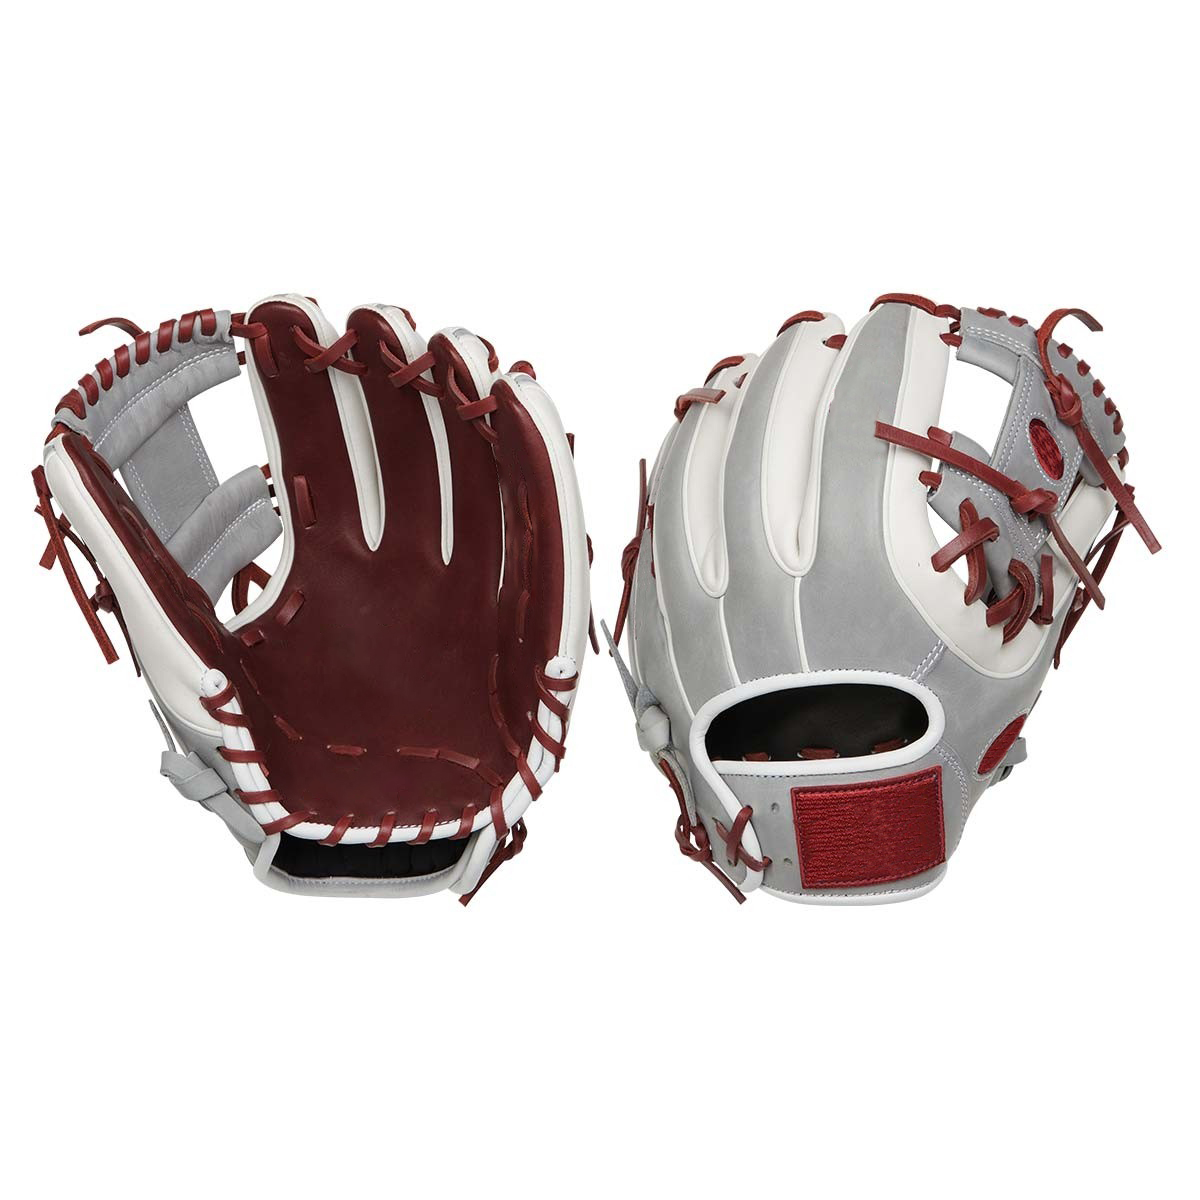 11.75" Steer hide leather infielders excellent performance baseball gloves